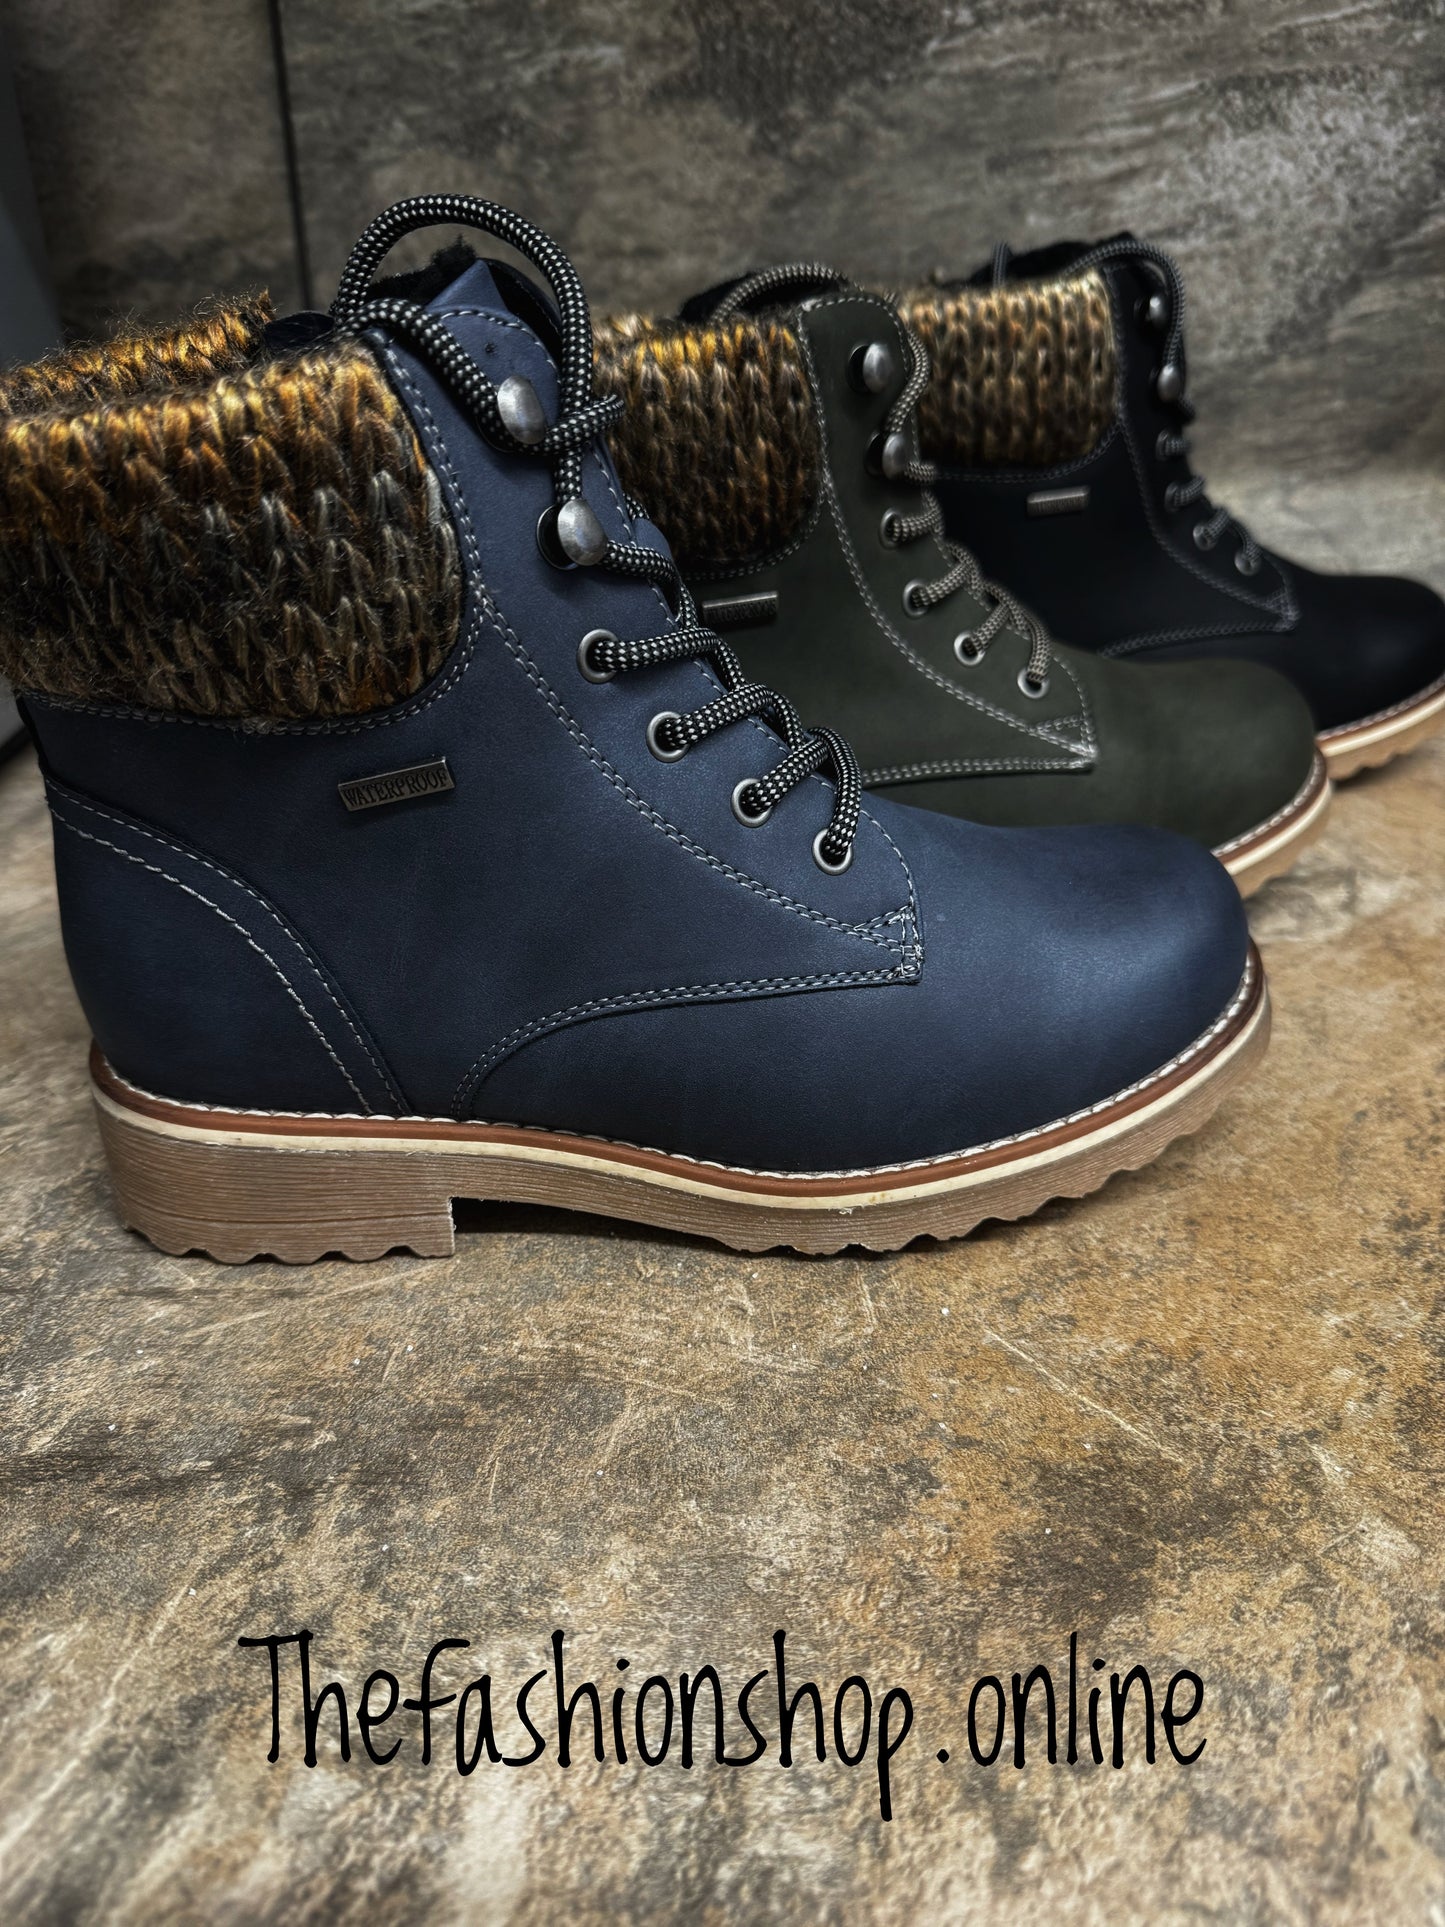 Lunar black Dallas waterproof ankle boots sizes 4-8